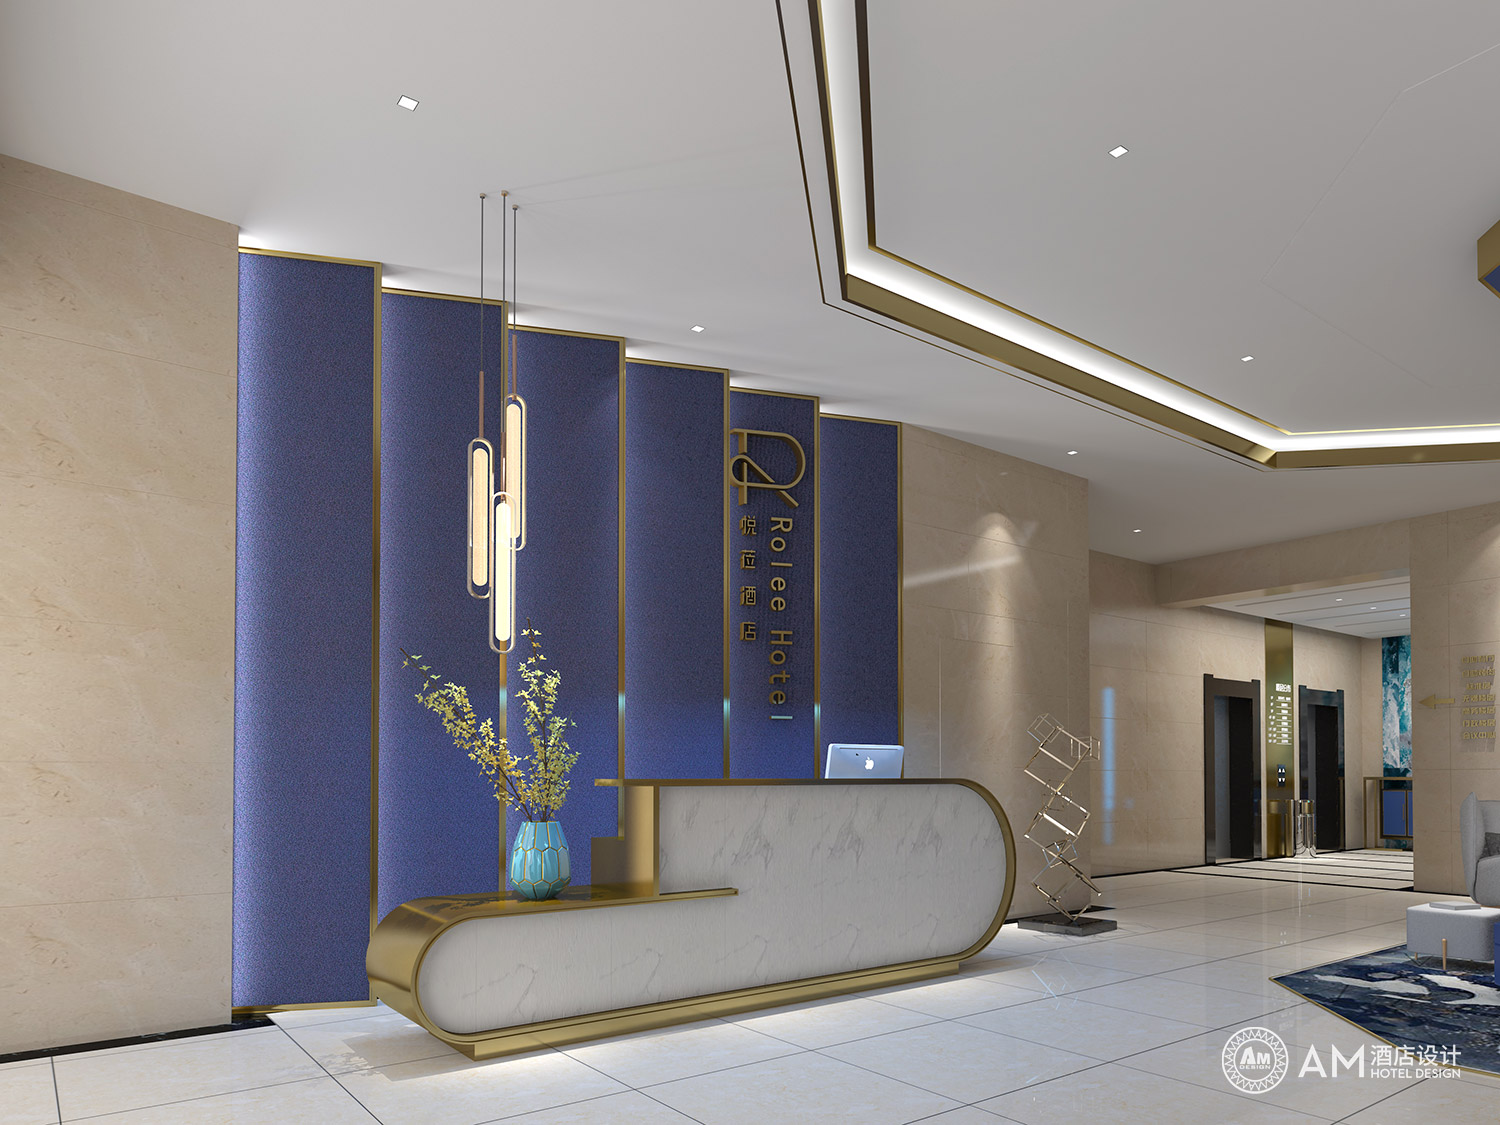 AM DESIGN | Design of lobby & front desk of Yueli Hotel